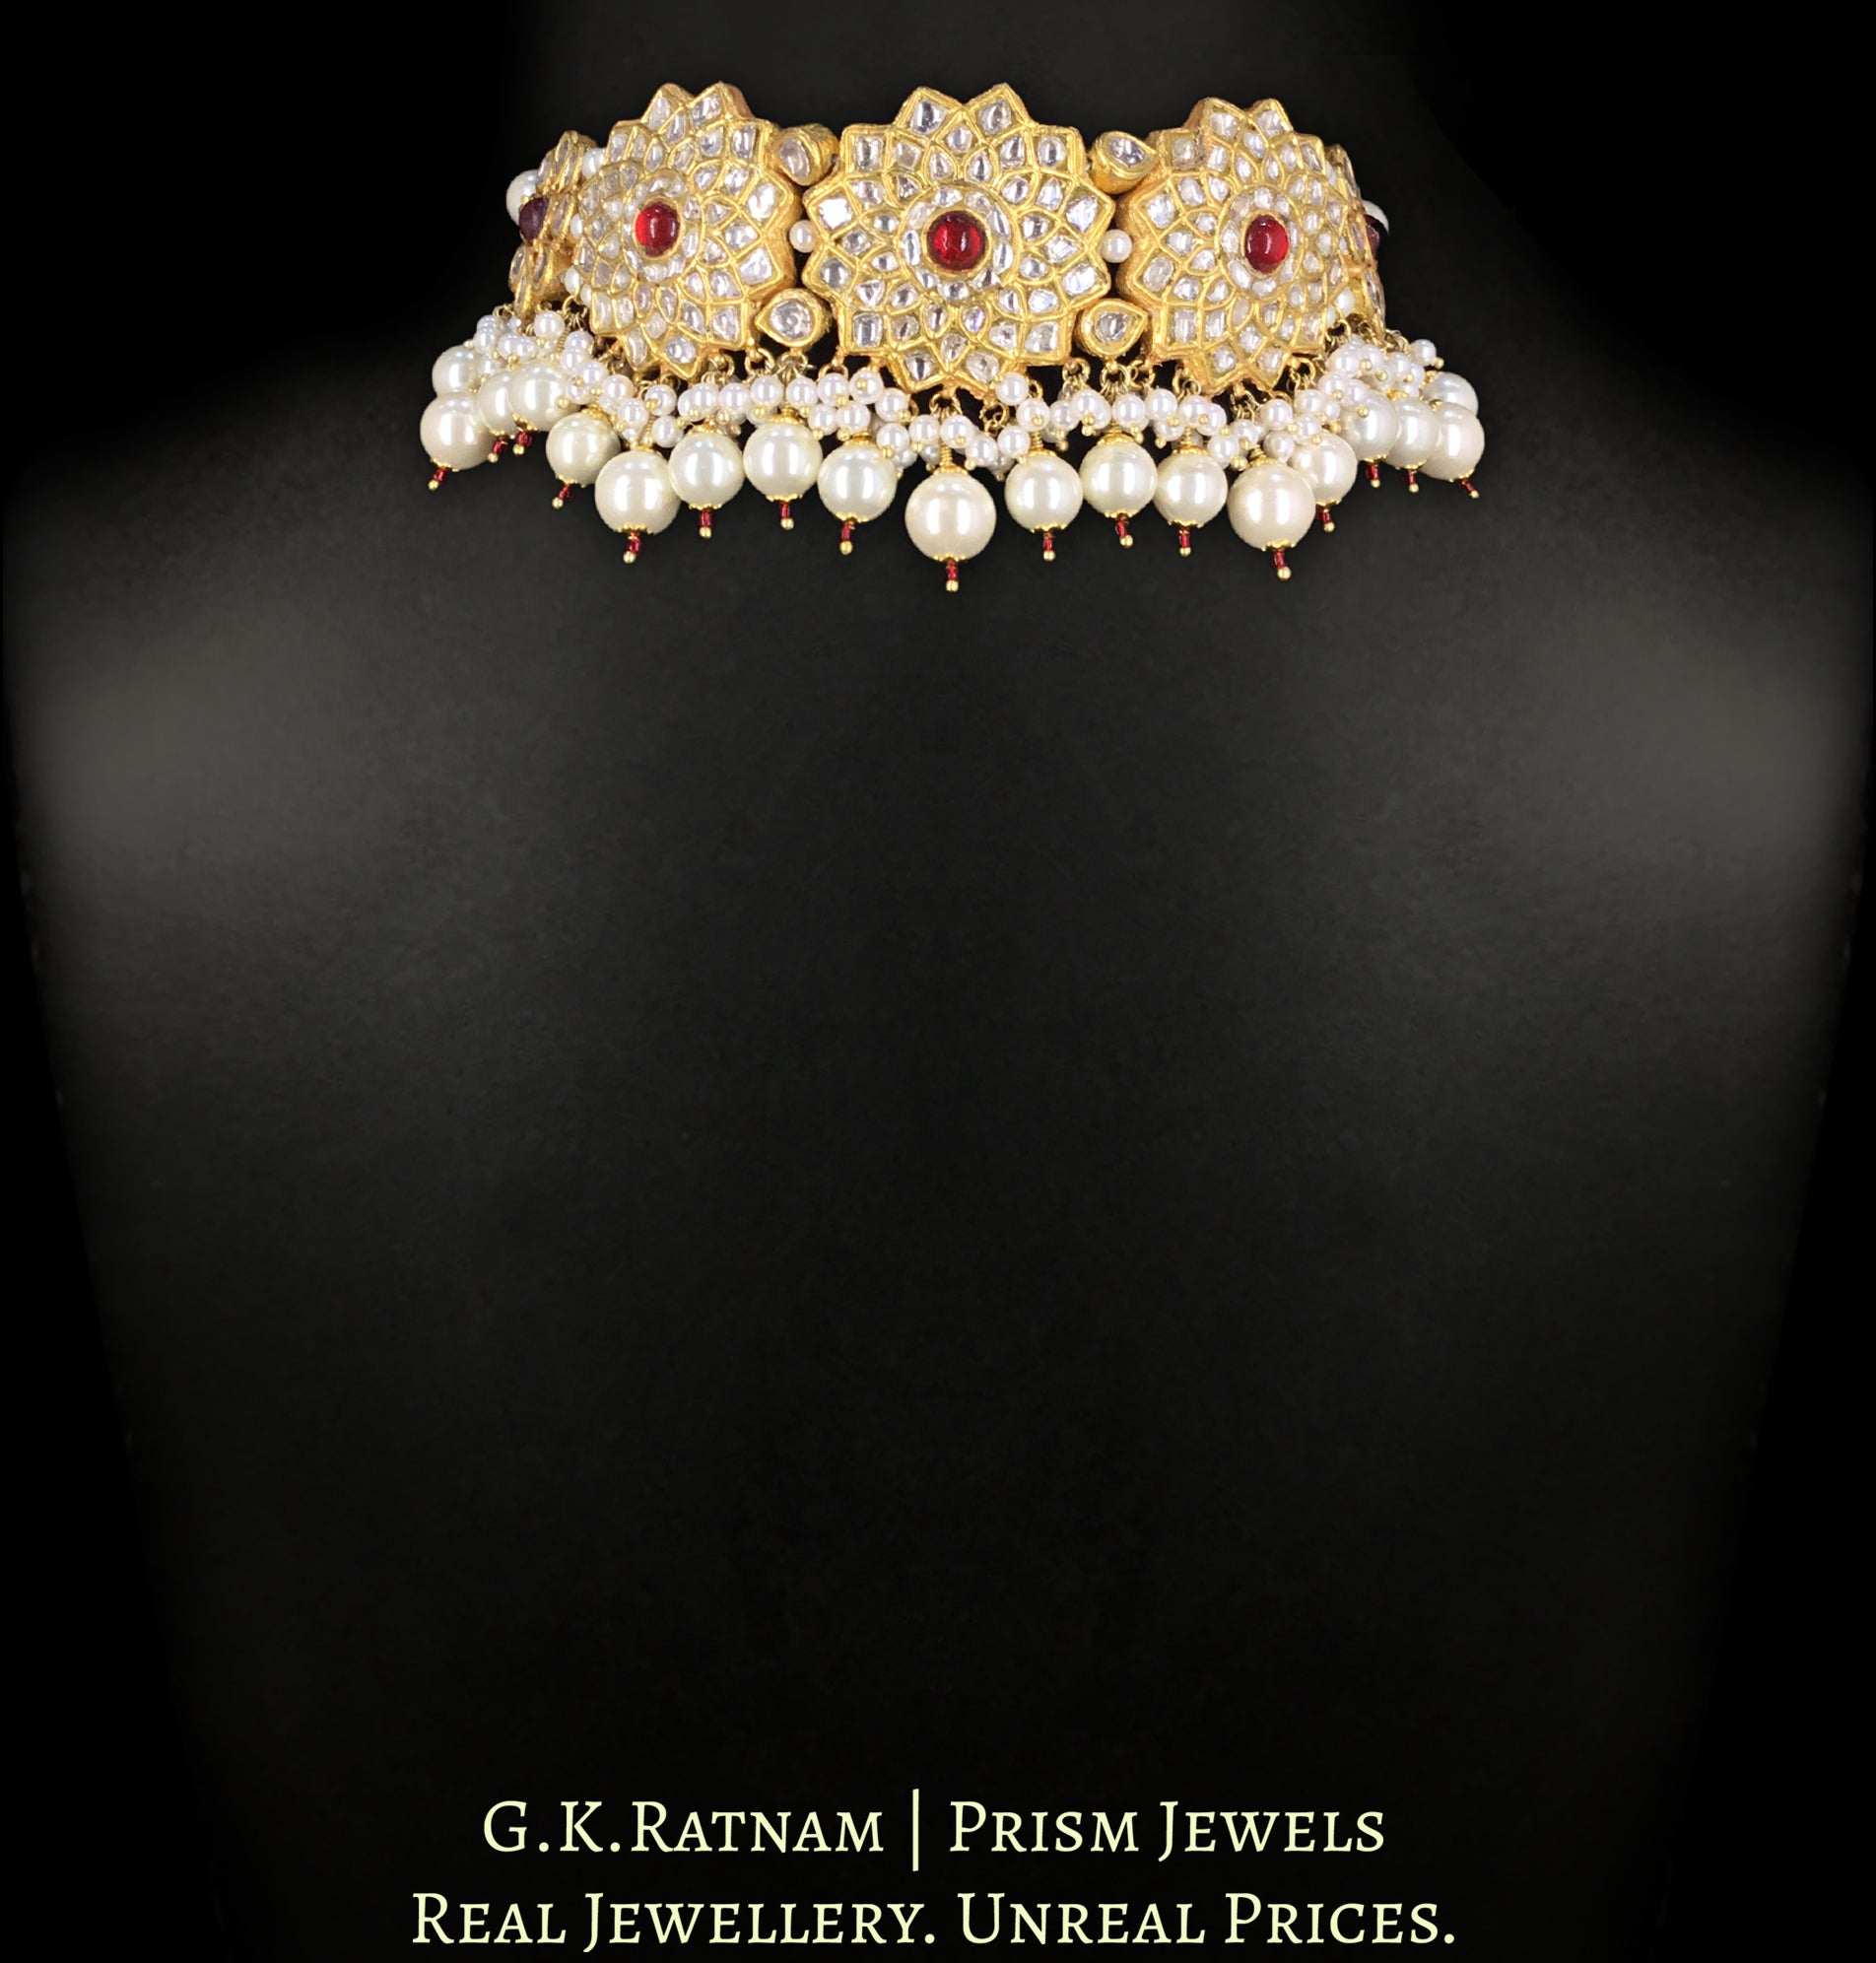 23k Gold and Diamond Polki Choker Necklace Set with ruby-center Starry Motifs